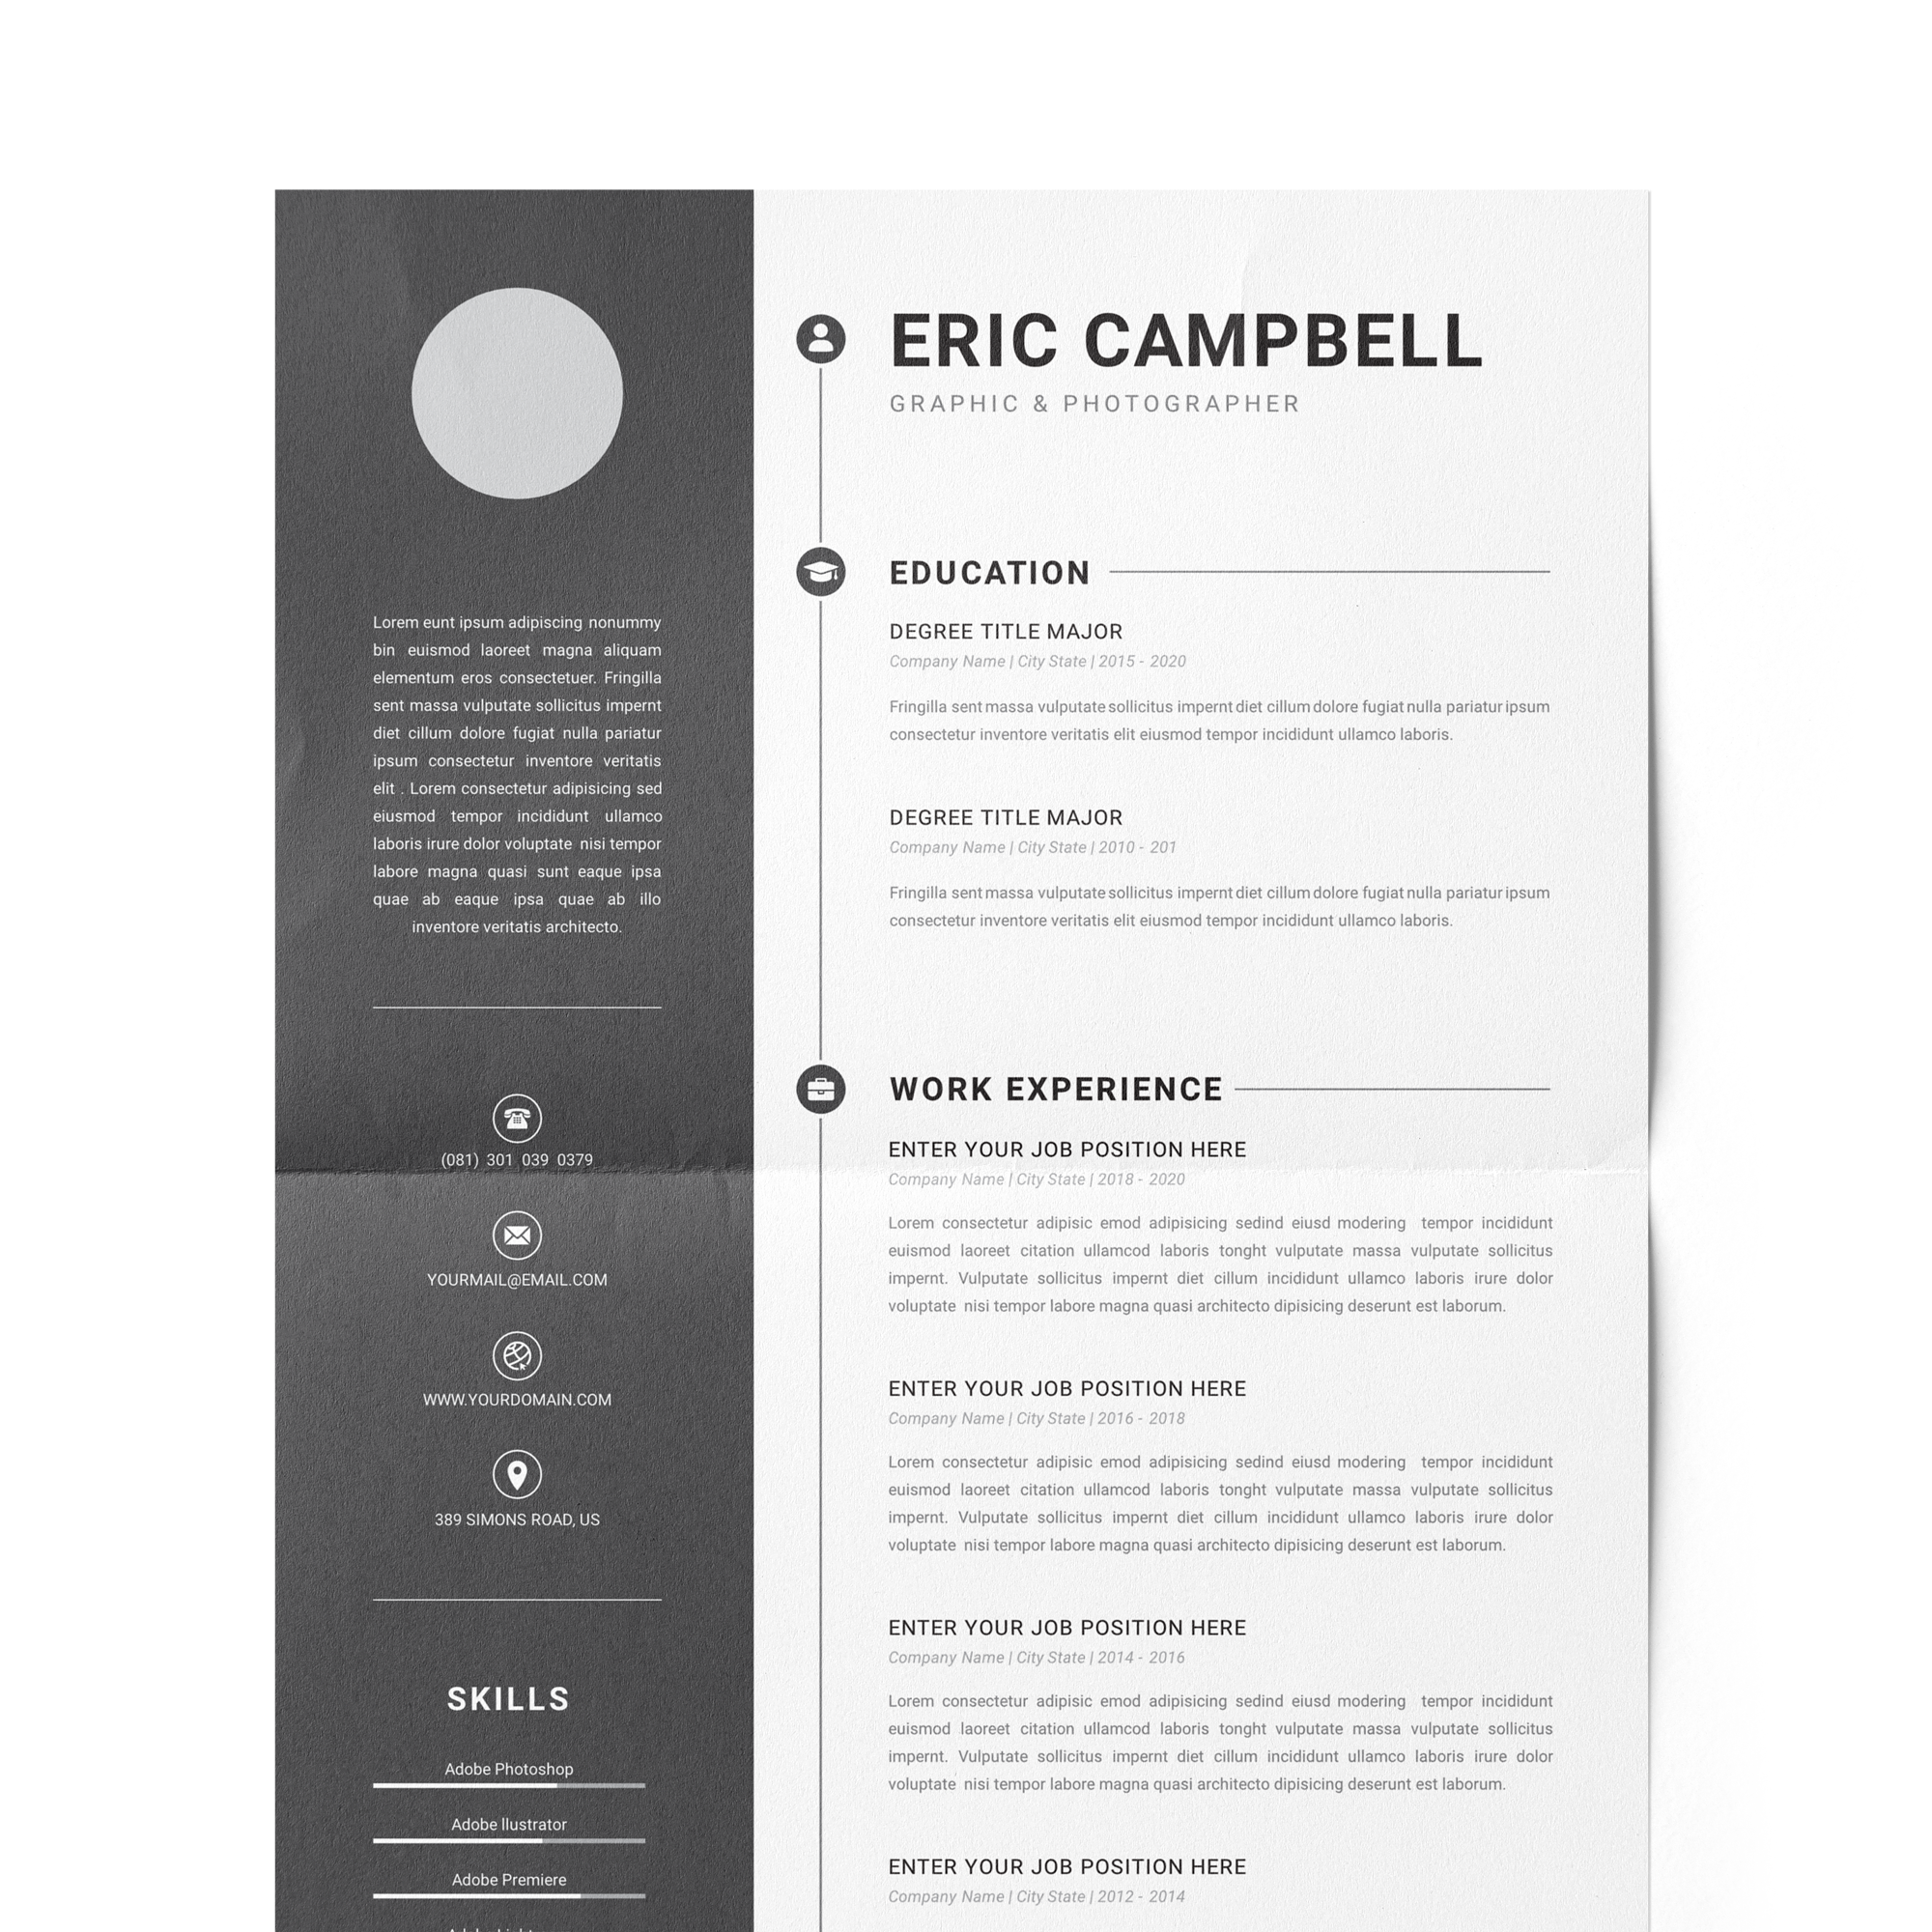 CV #72 Eric Campbell